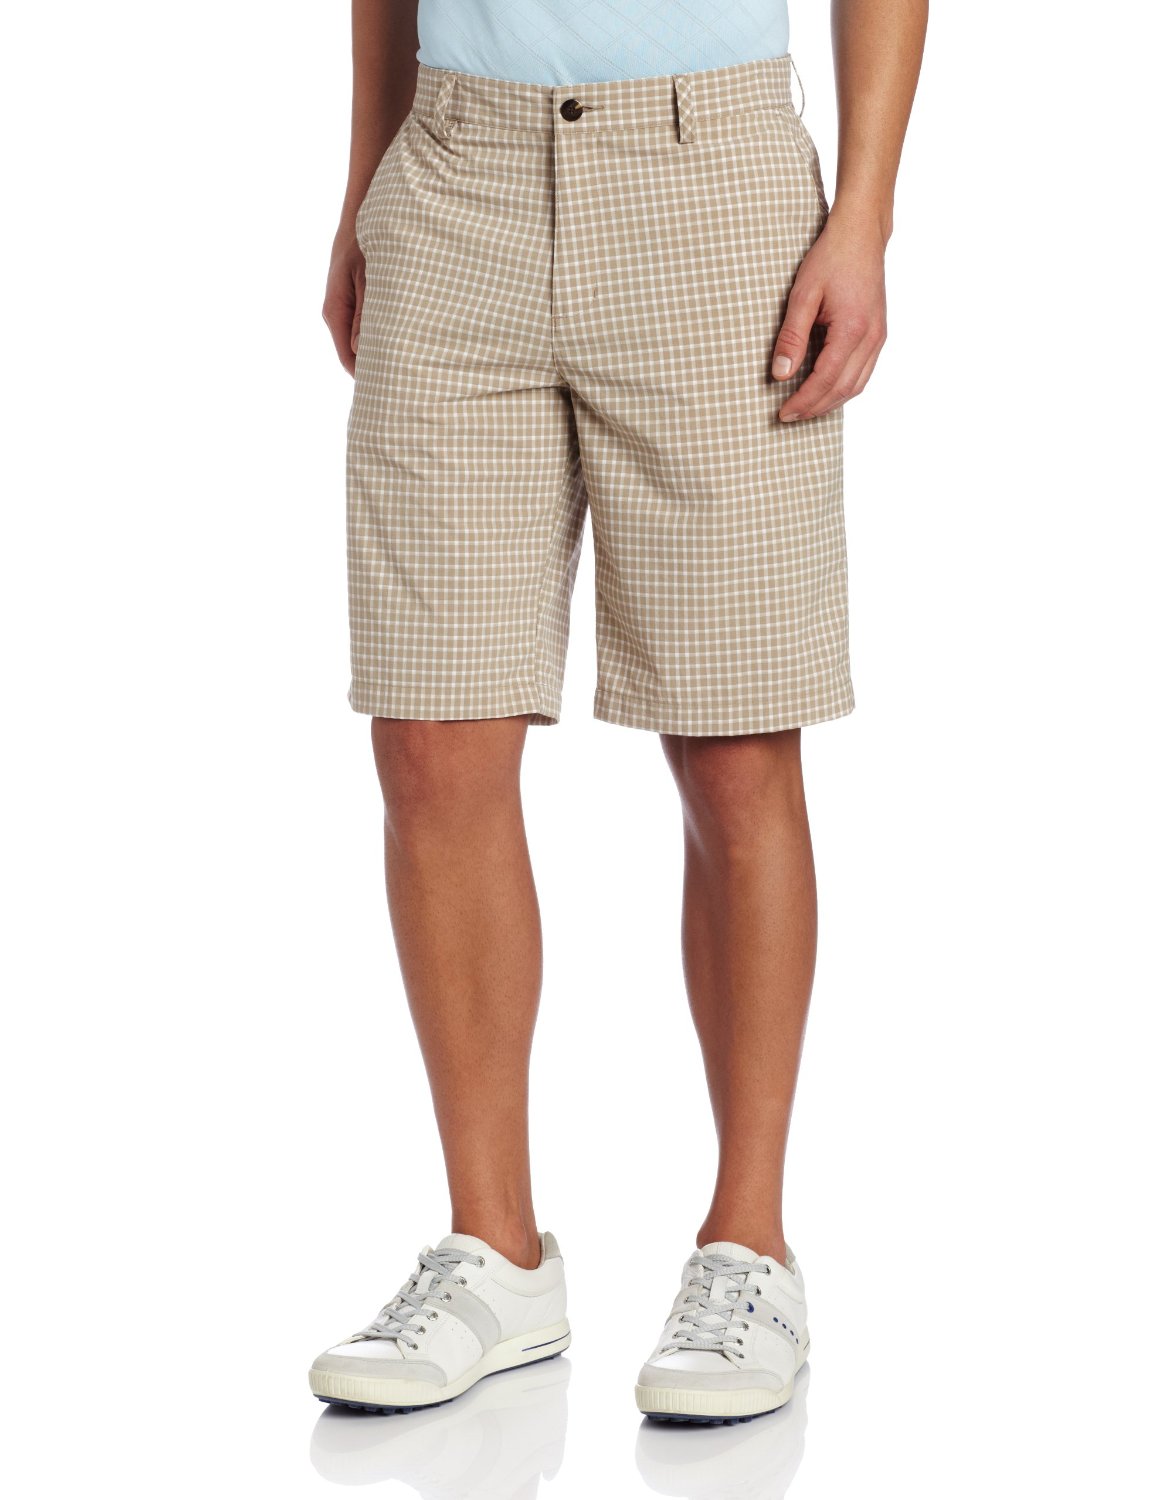 Adidas Climalite Neutral Plaid Golf Shorts